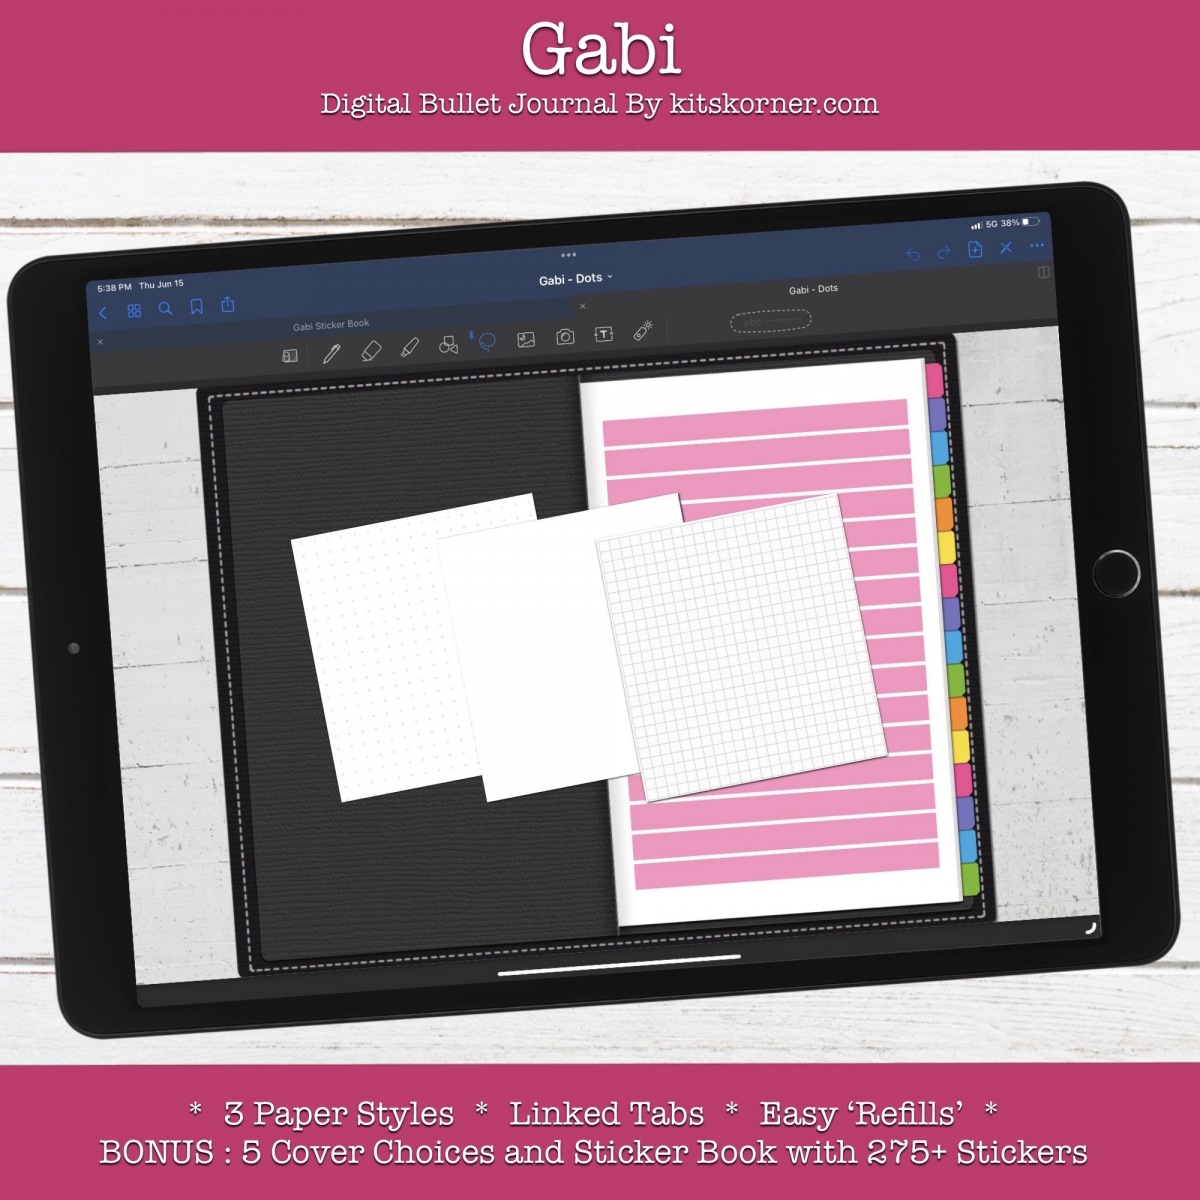 Gabi : Paper Styles